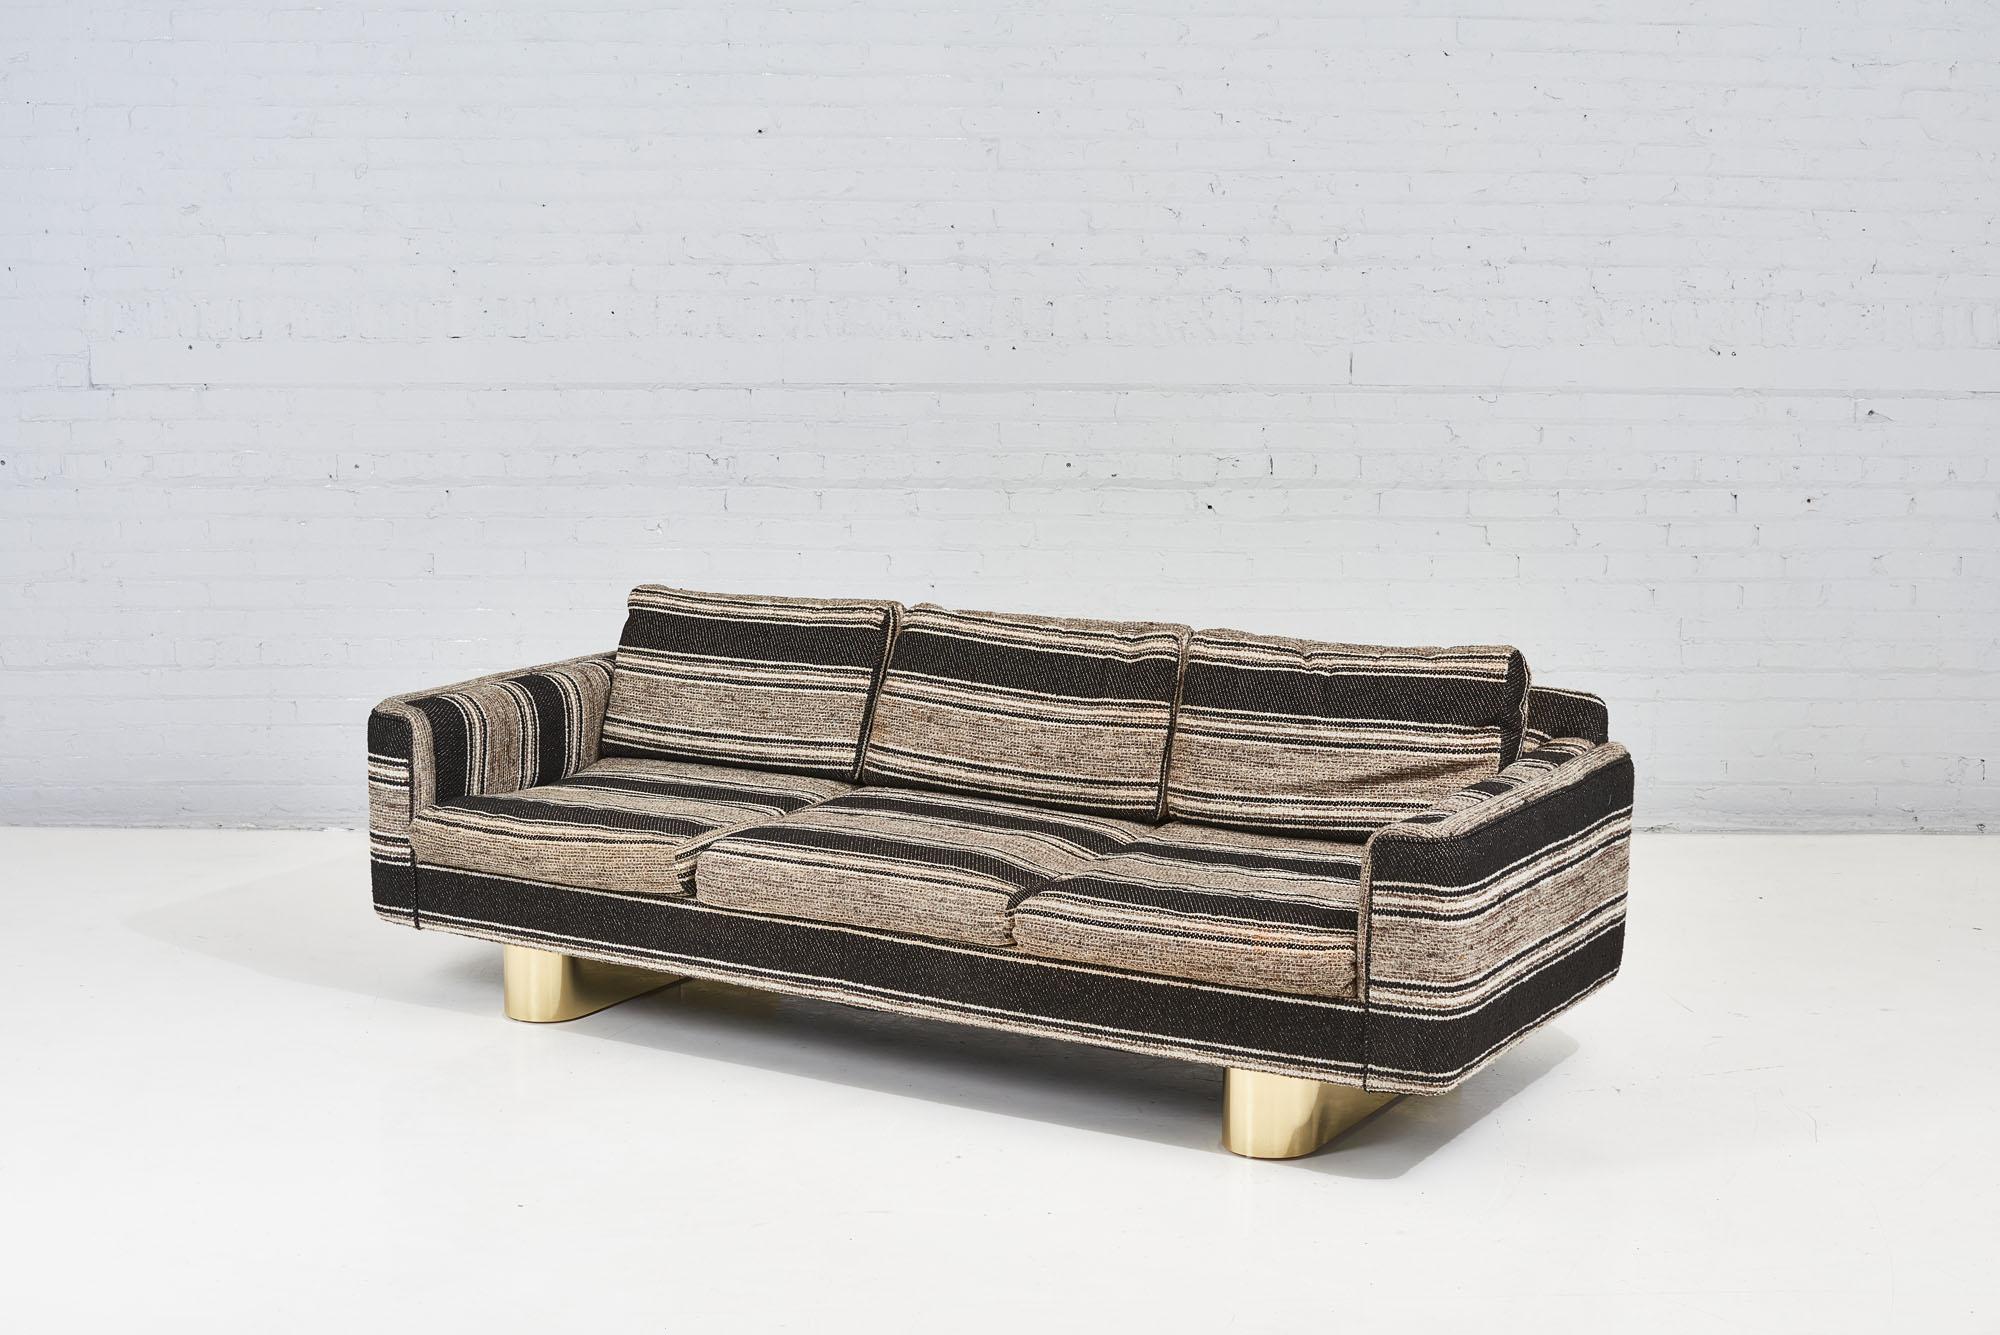 Selig 1970's sofa on brass Plinth bases, Original upholstery.